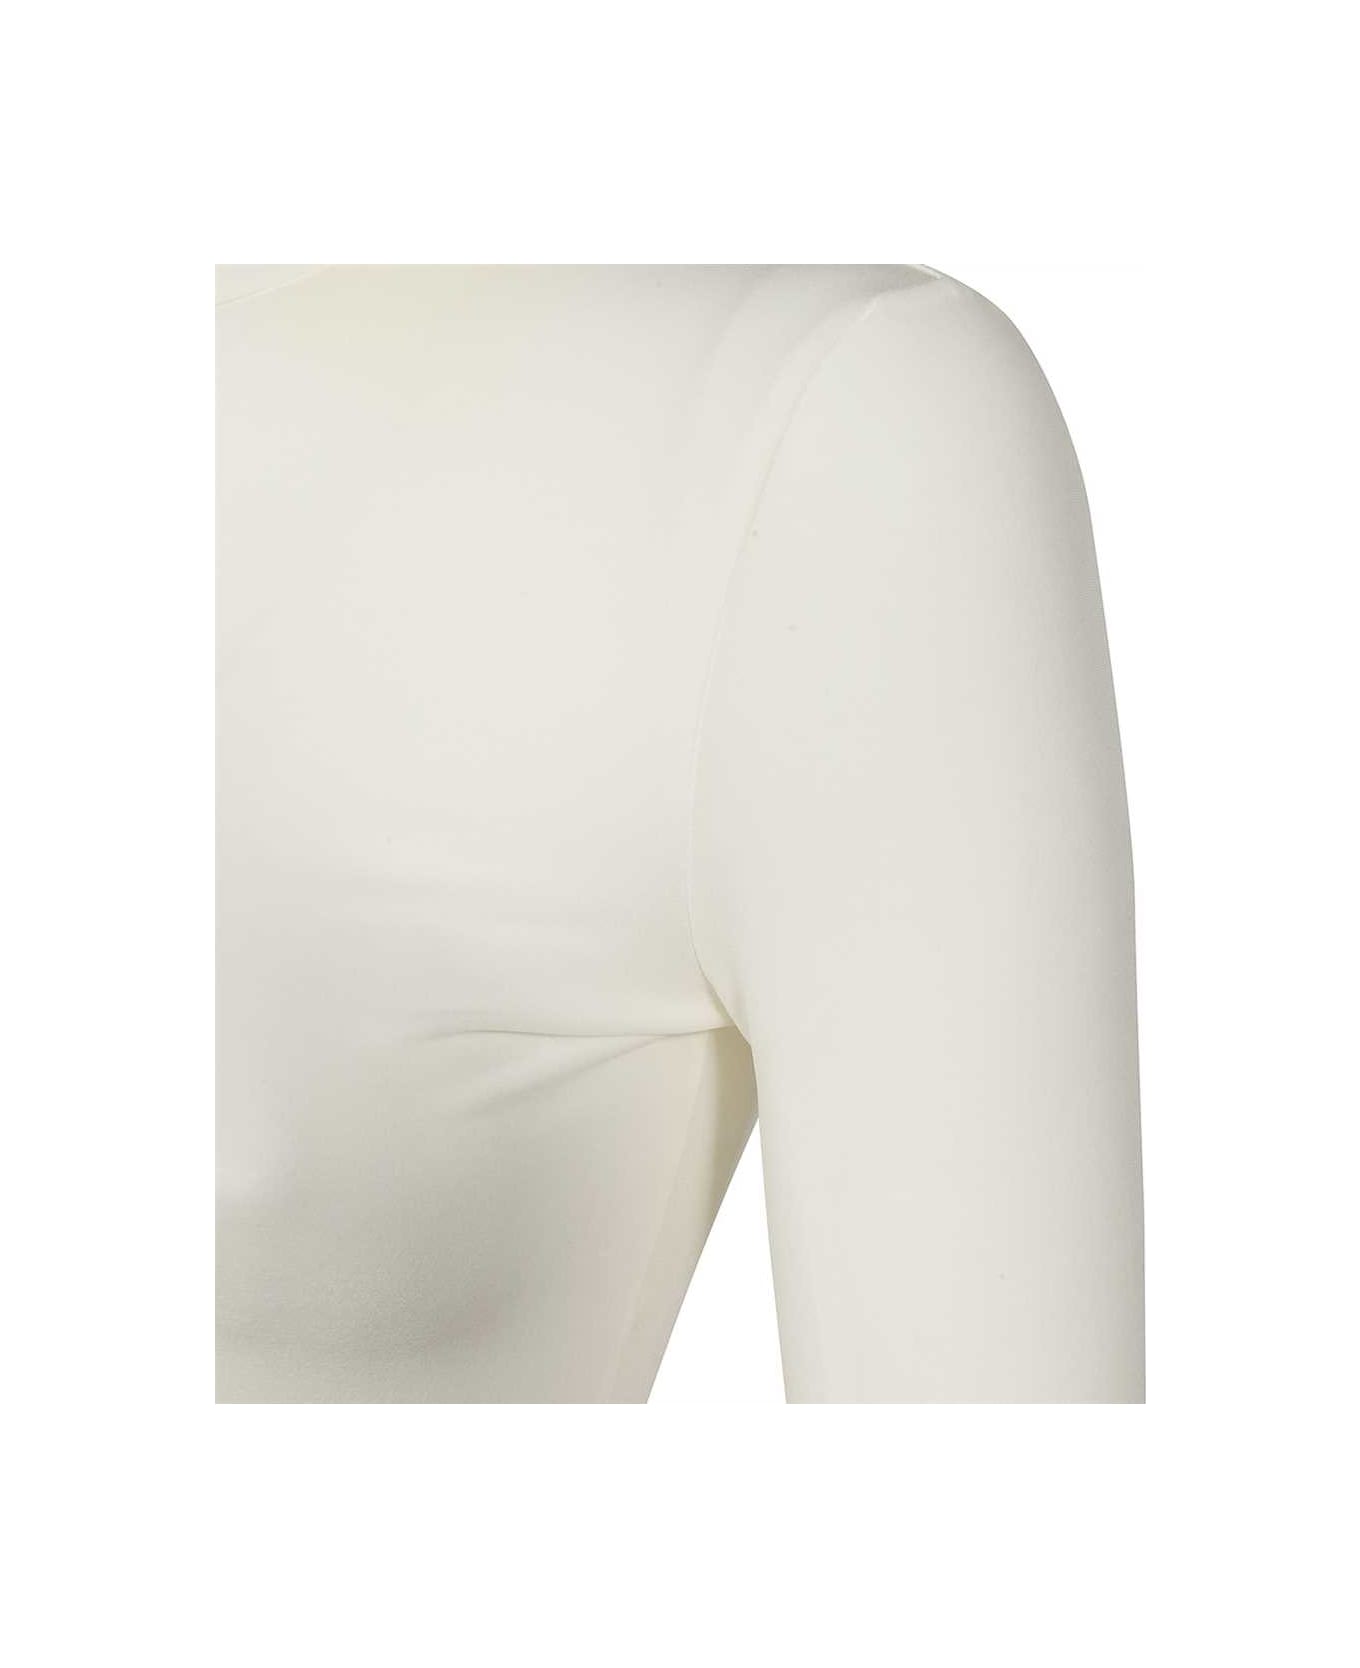 Max Mara Gazza Long Sleeve Top - White